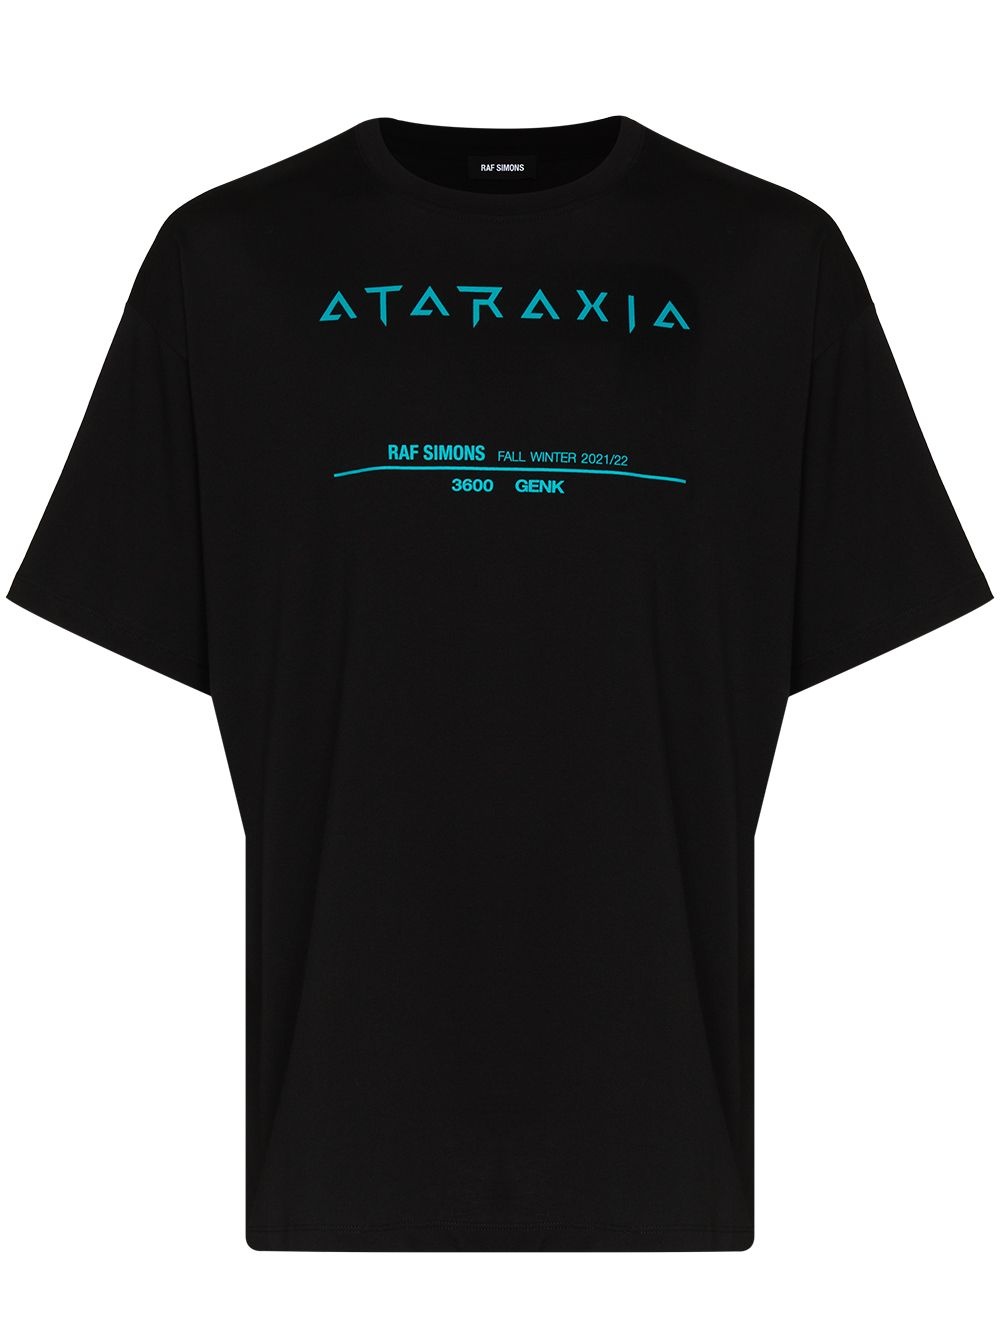 Ataraxia Tour cotton T-shirt - 1